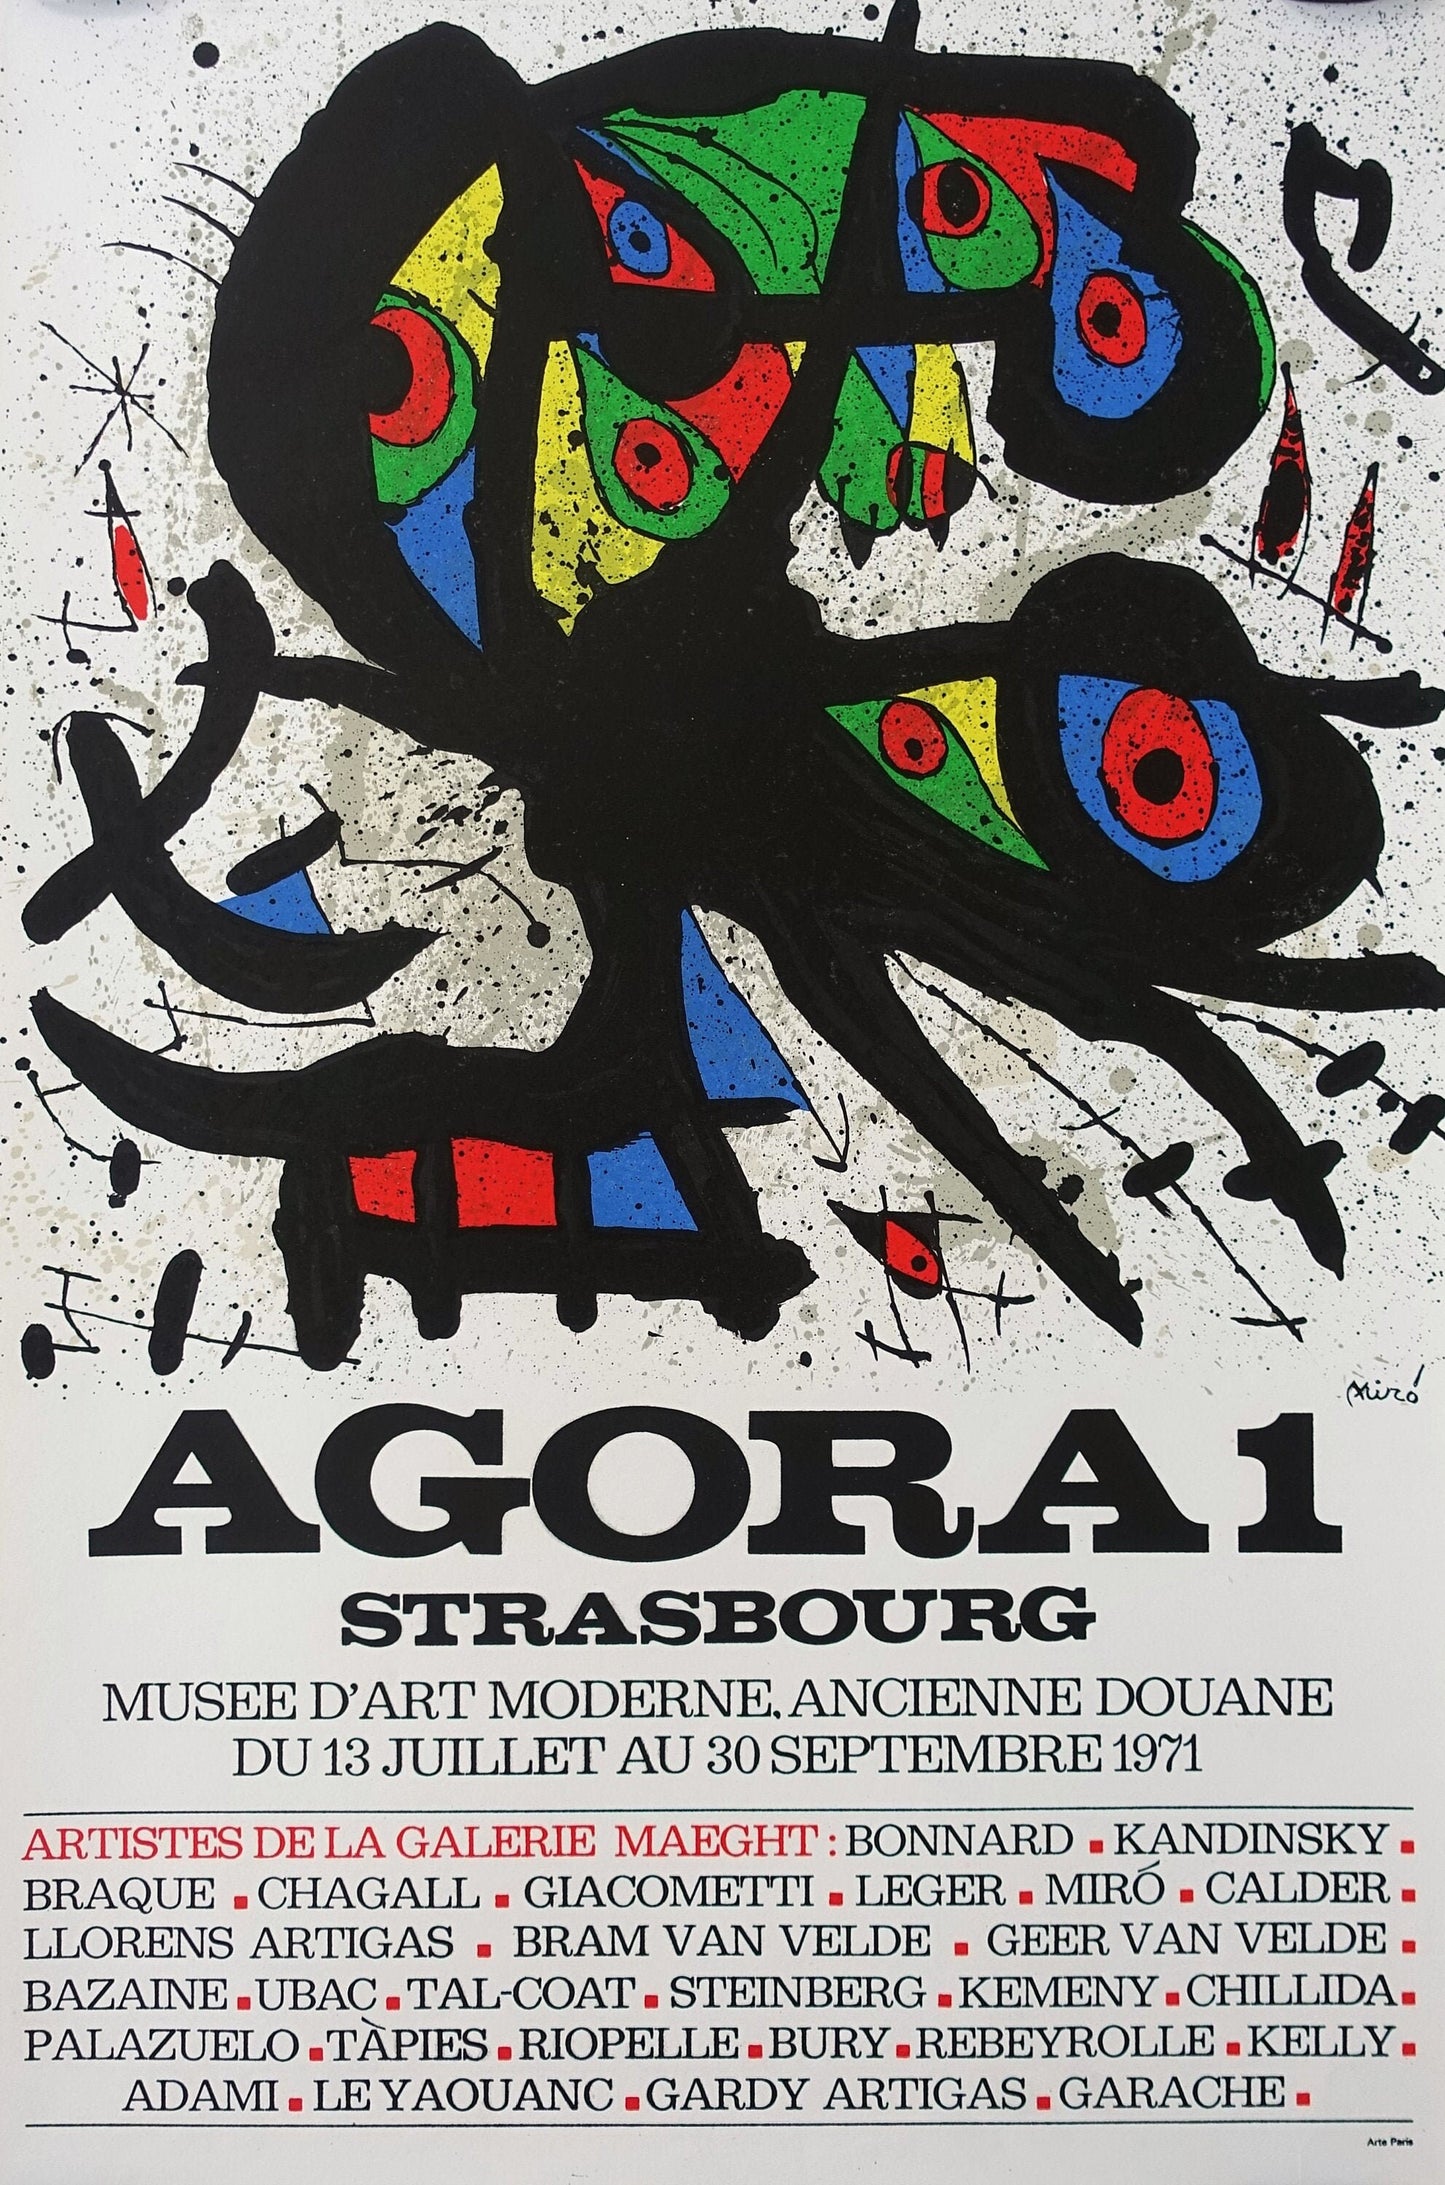 1971 Miro Agora 1 Strasbourg Exhibition Poster - Original Vintage Poster